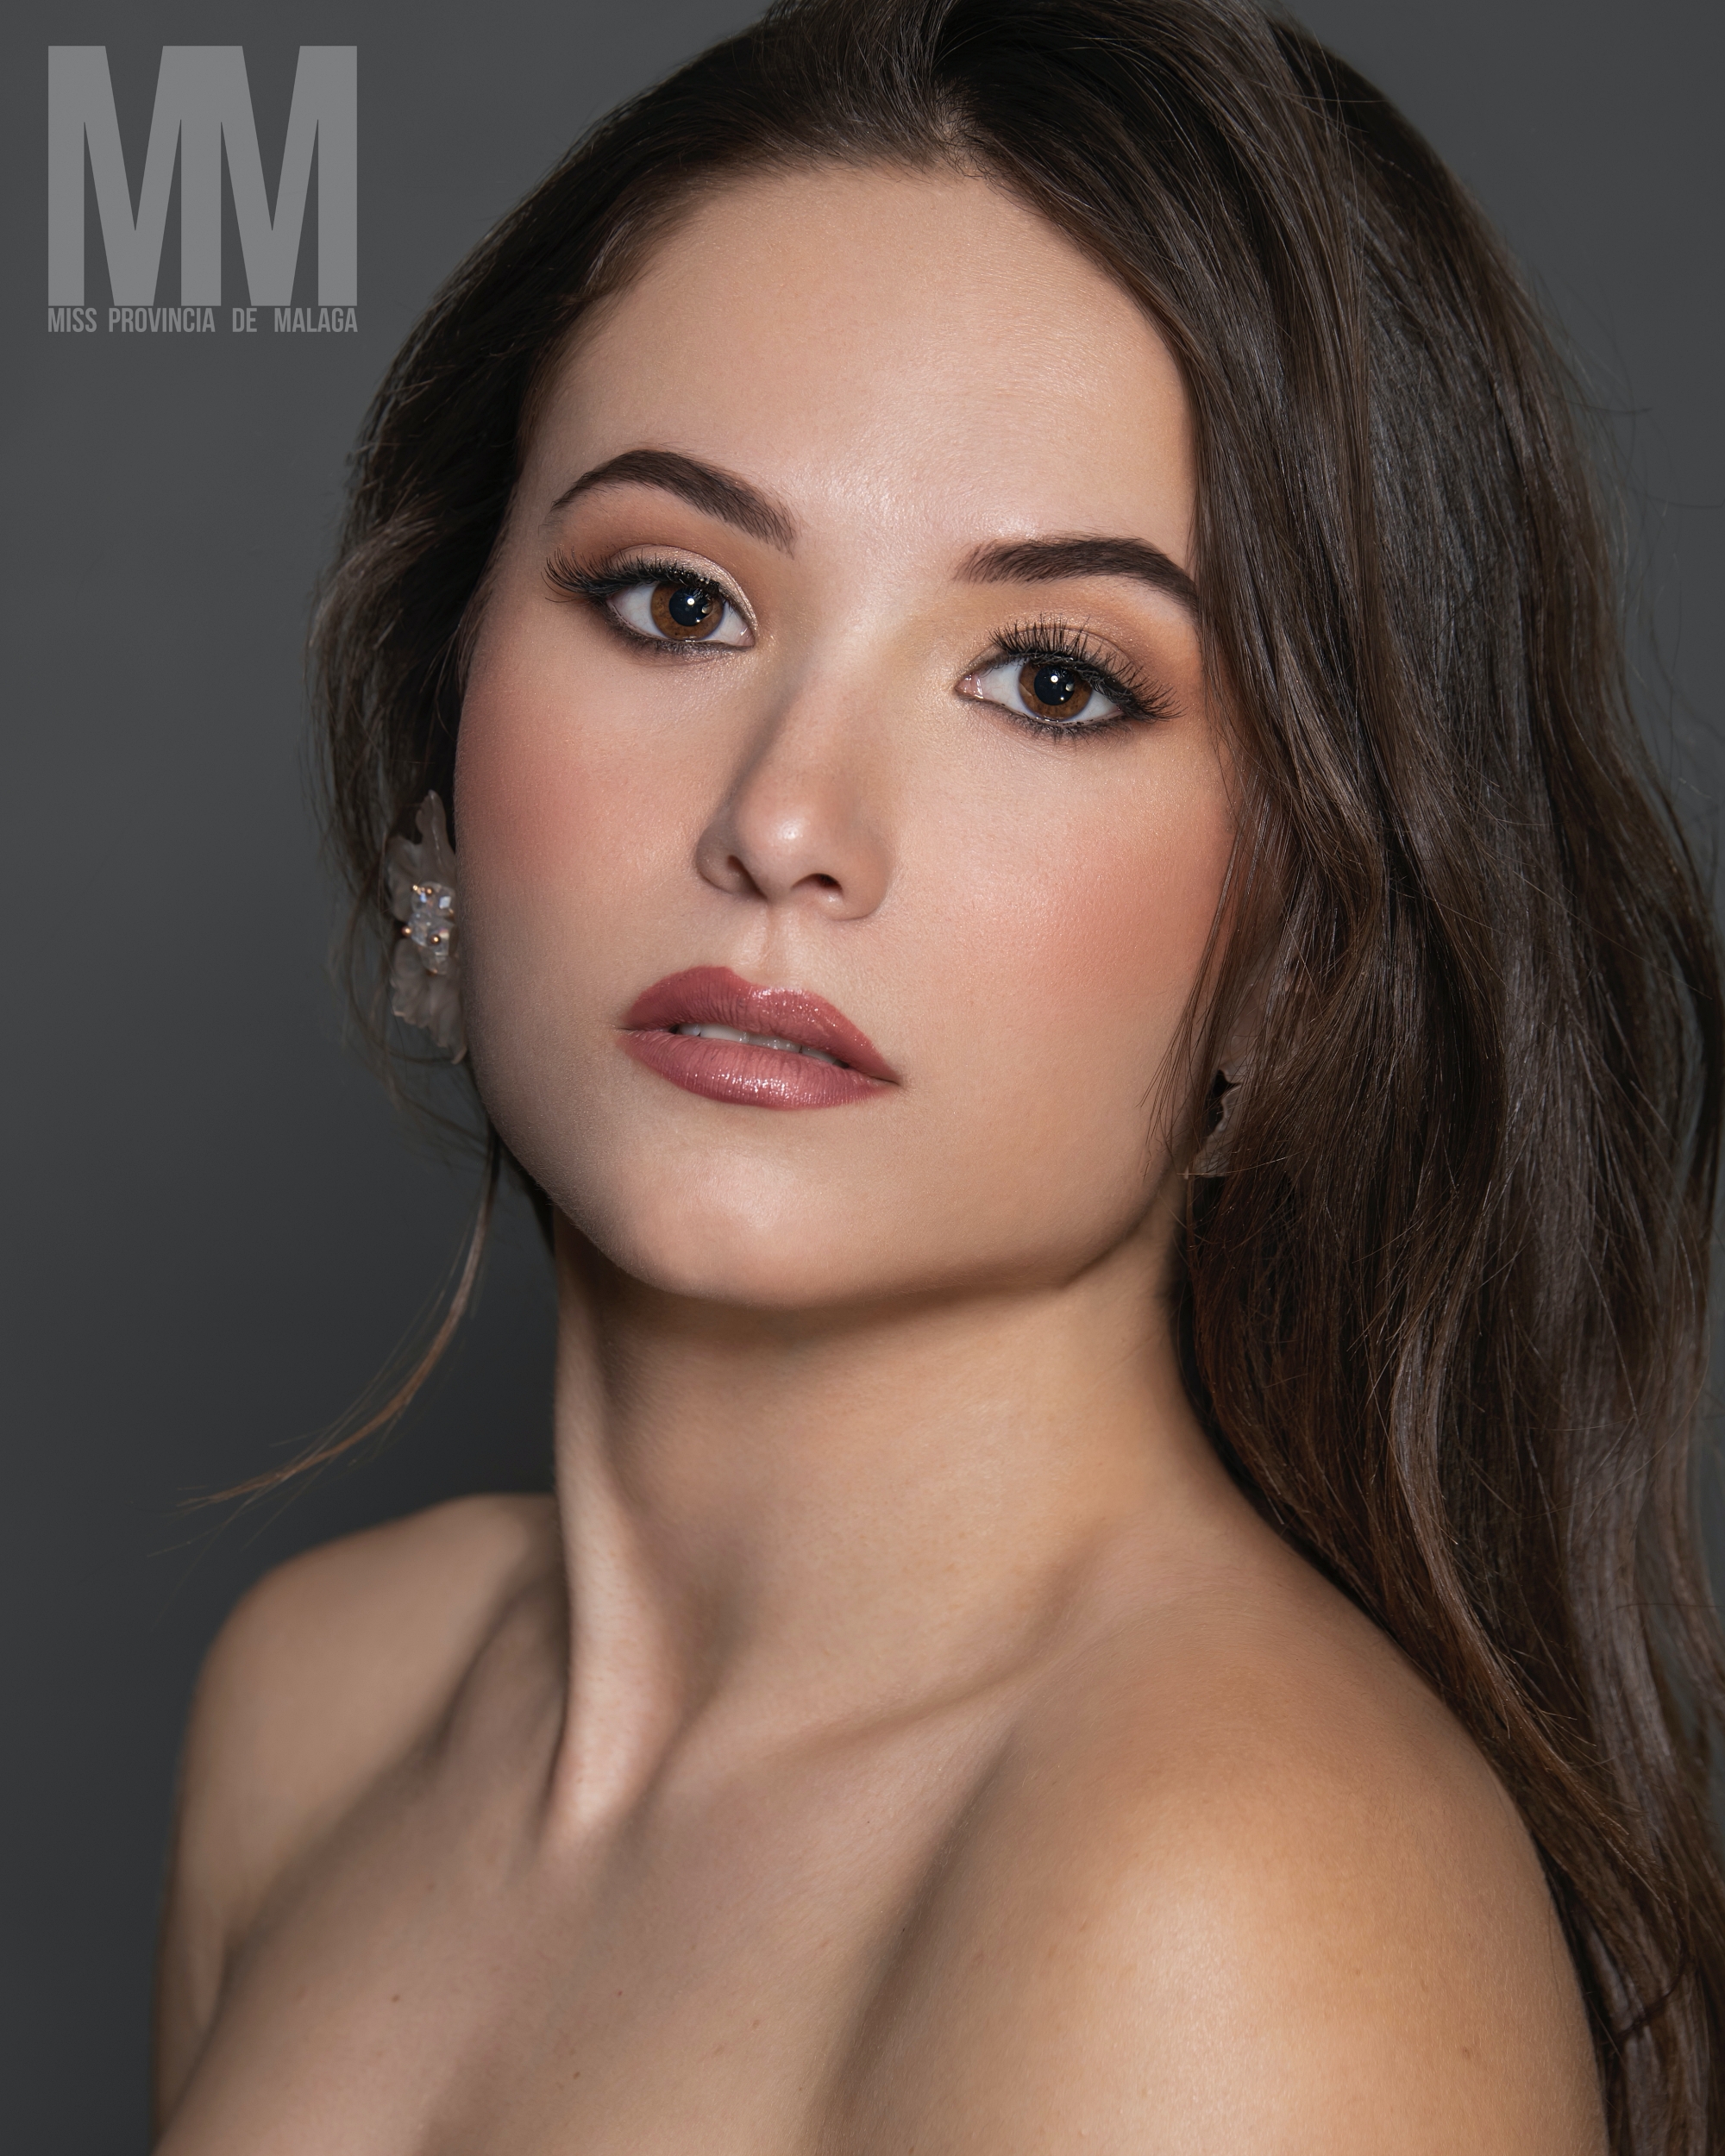 Miss Provincia de Malaga 2022 MISS RINCON DE LA VICTORIA Alicia Rueda 1